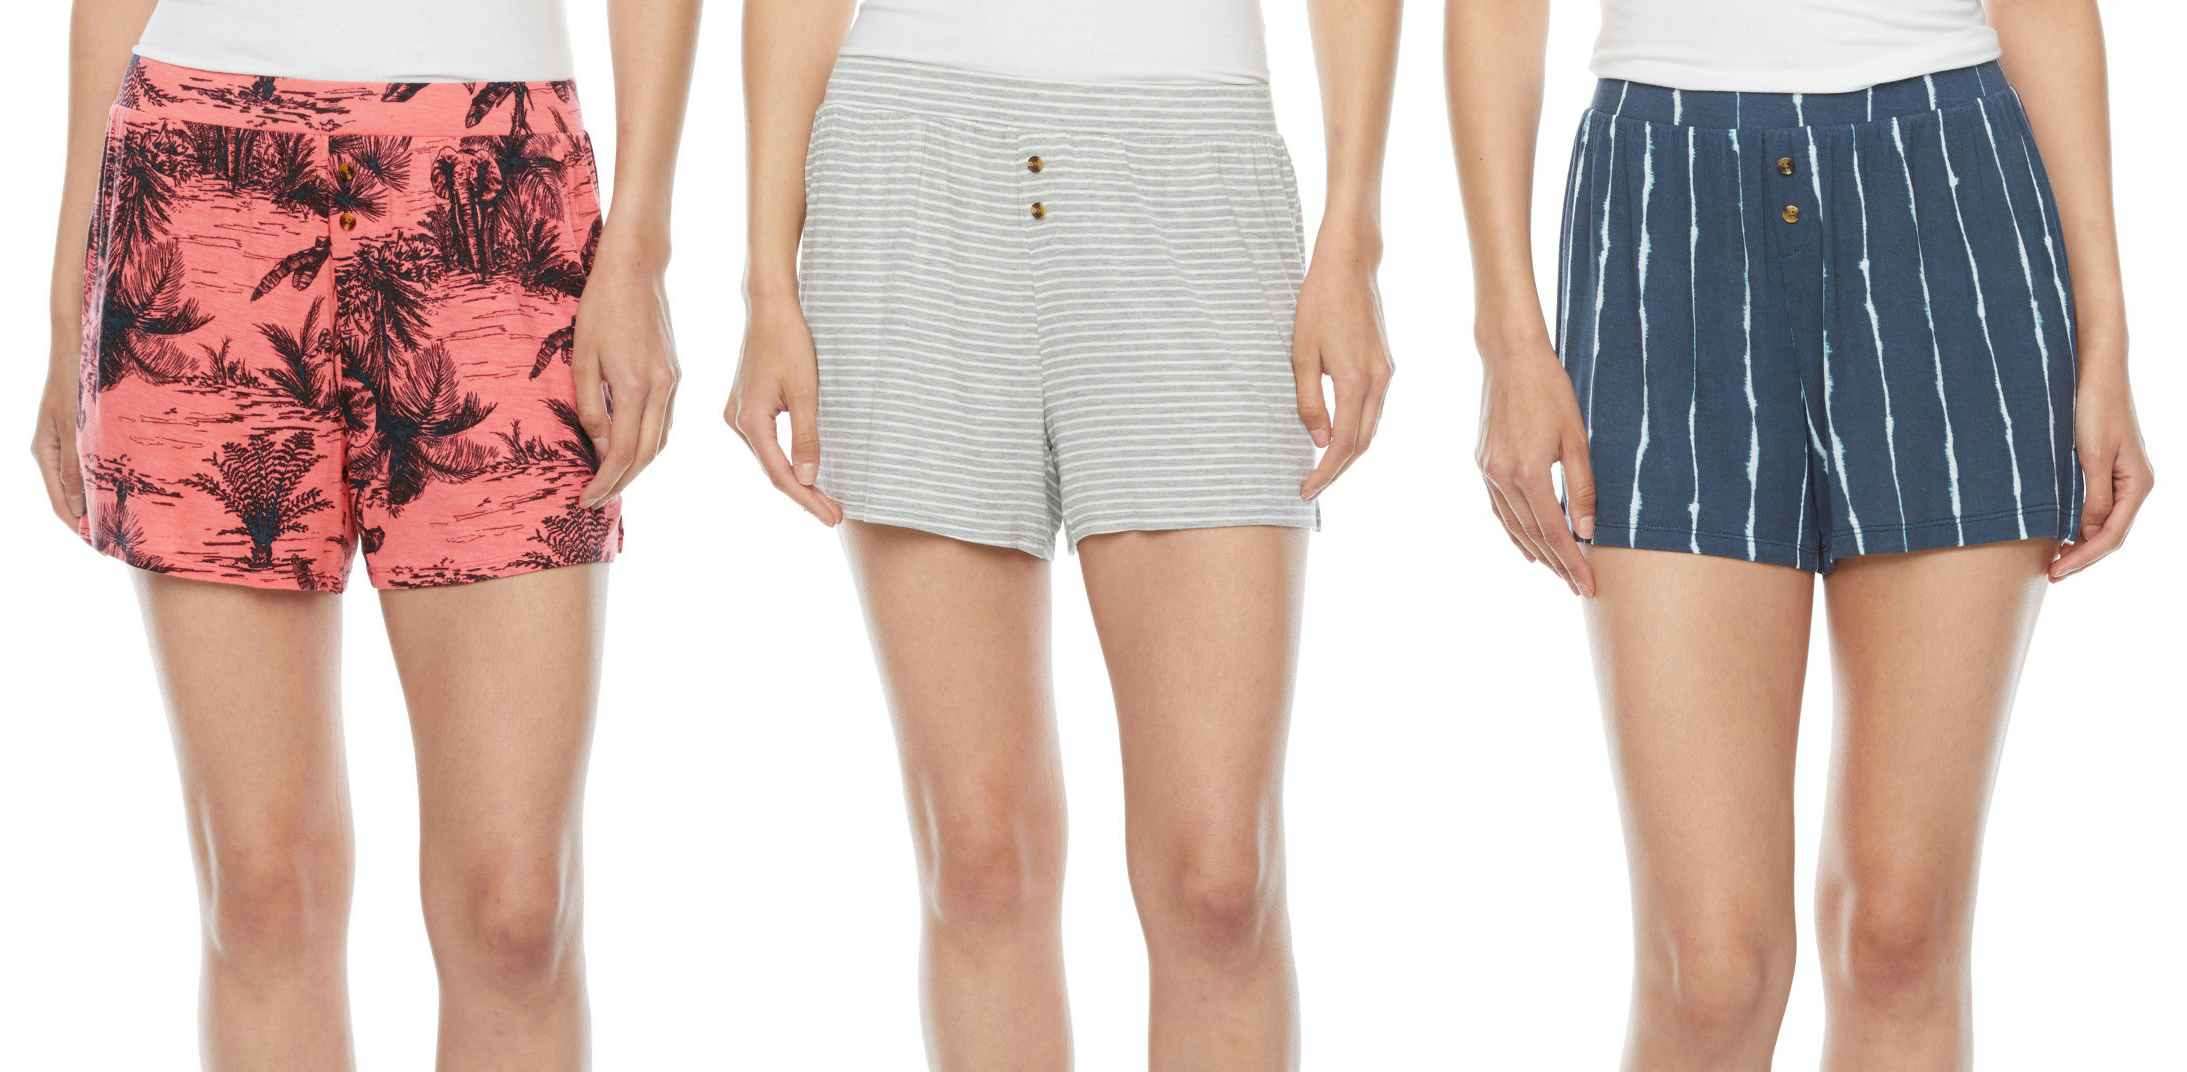 Stock photo collage of three women's pajama shorts